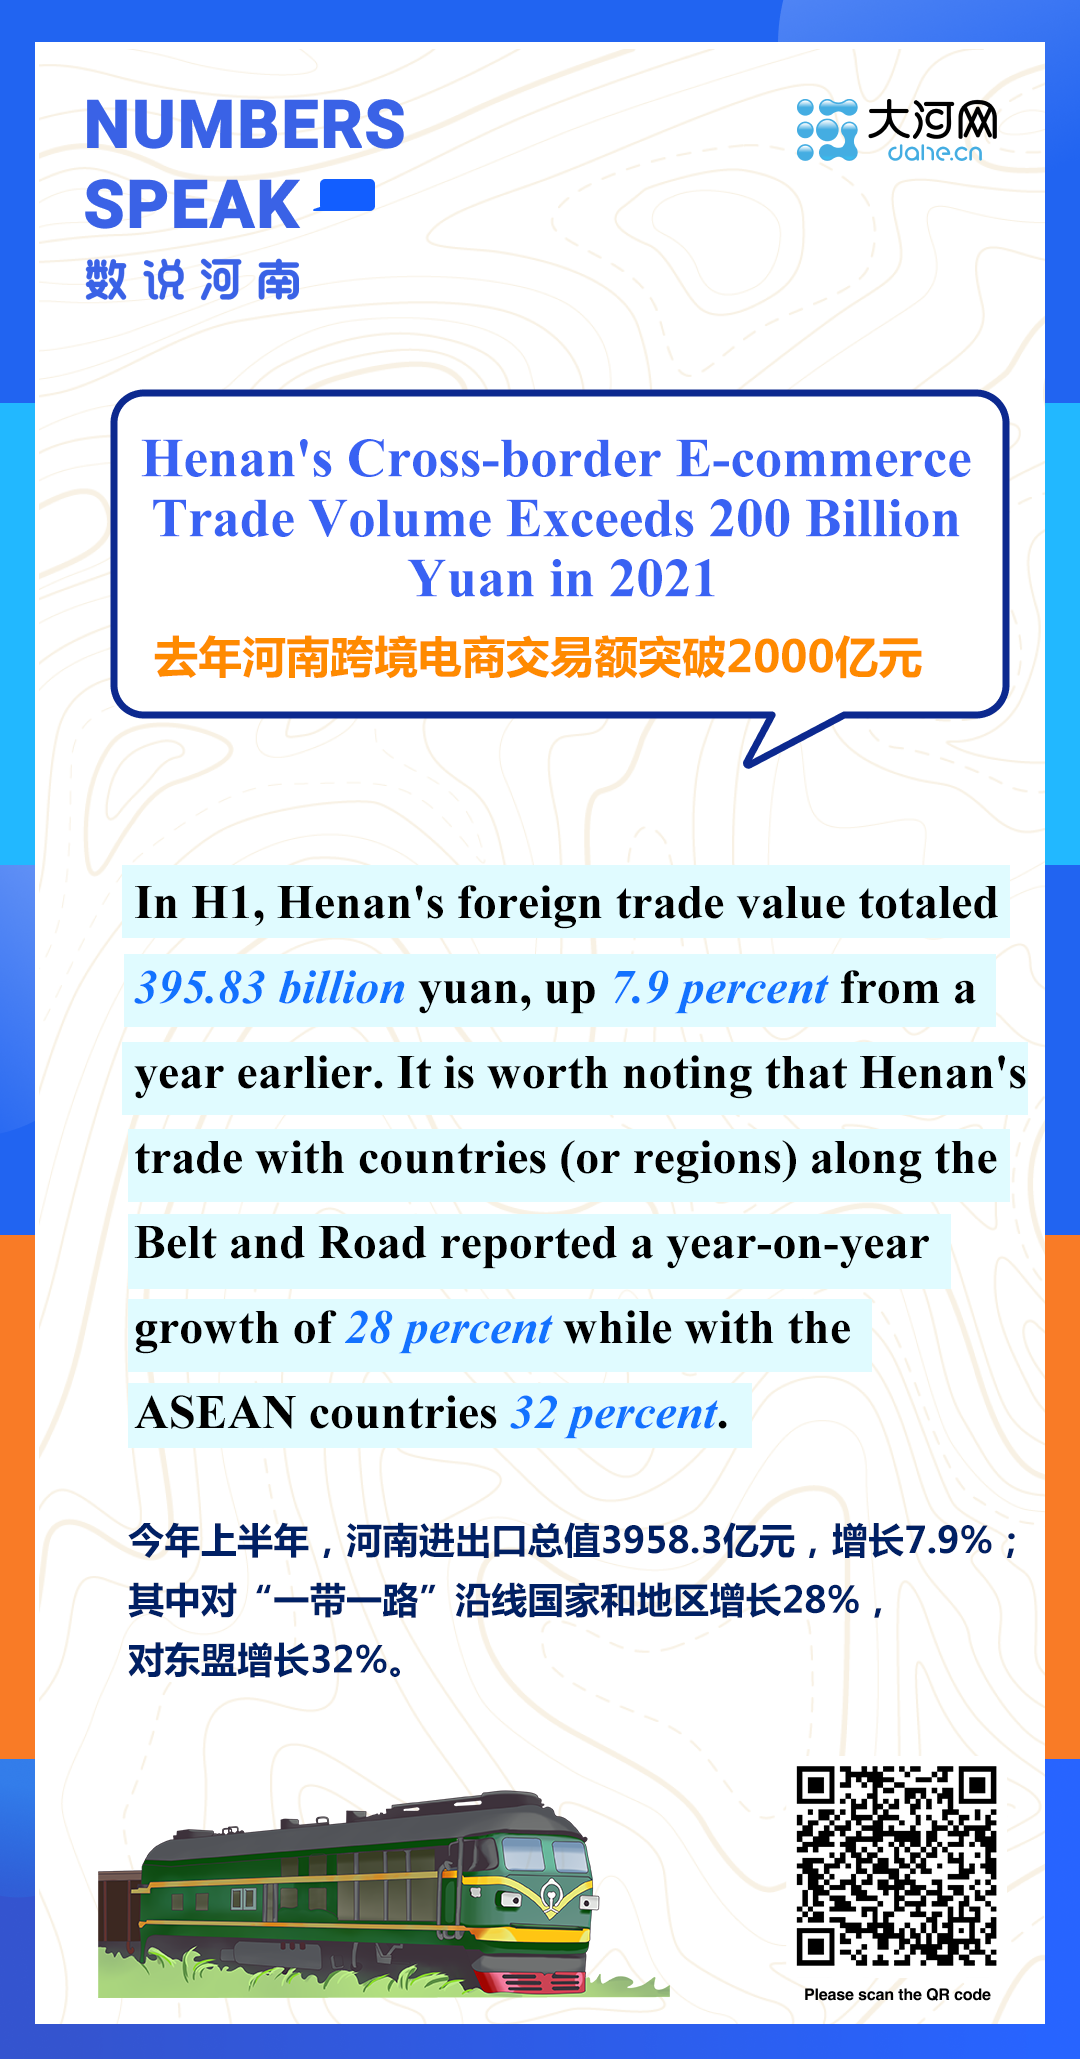 Henan's Cross-border E-commerce Trade Volume Exceeds 200 Billion Yuan in 2021